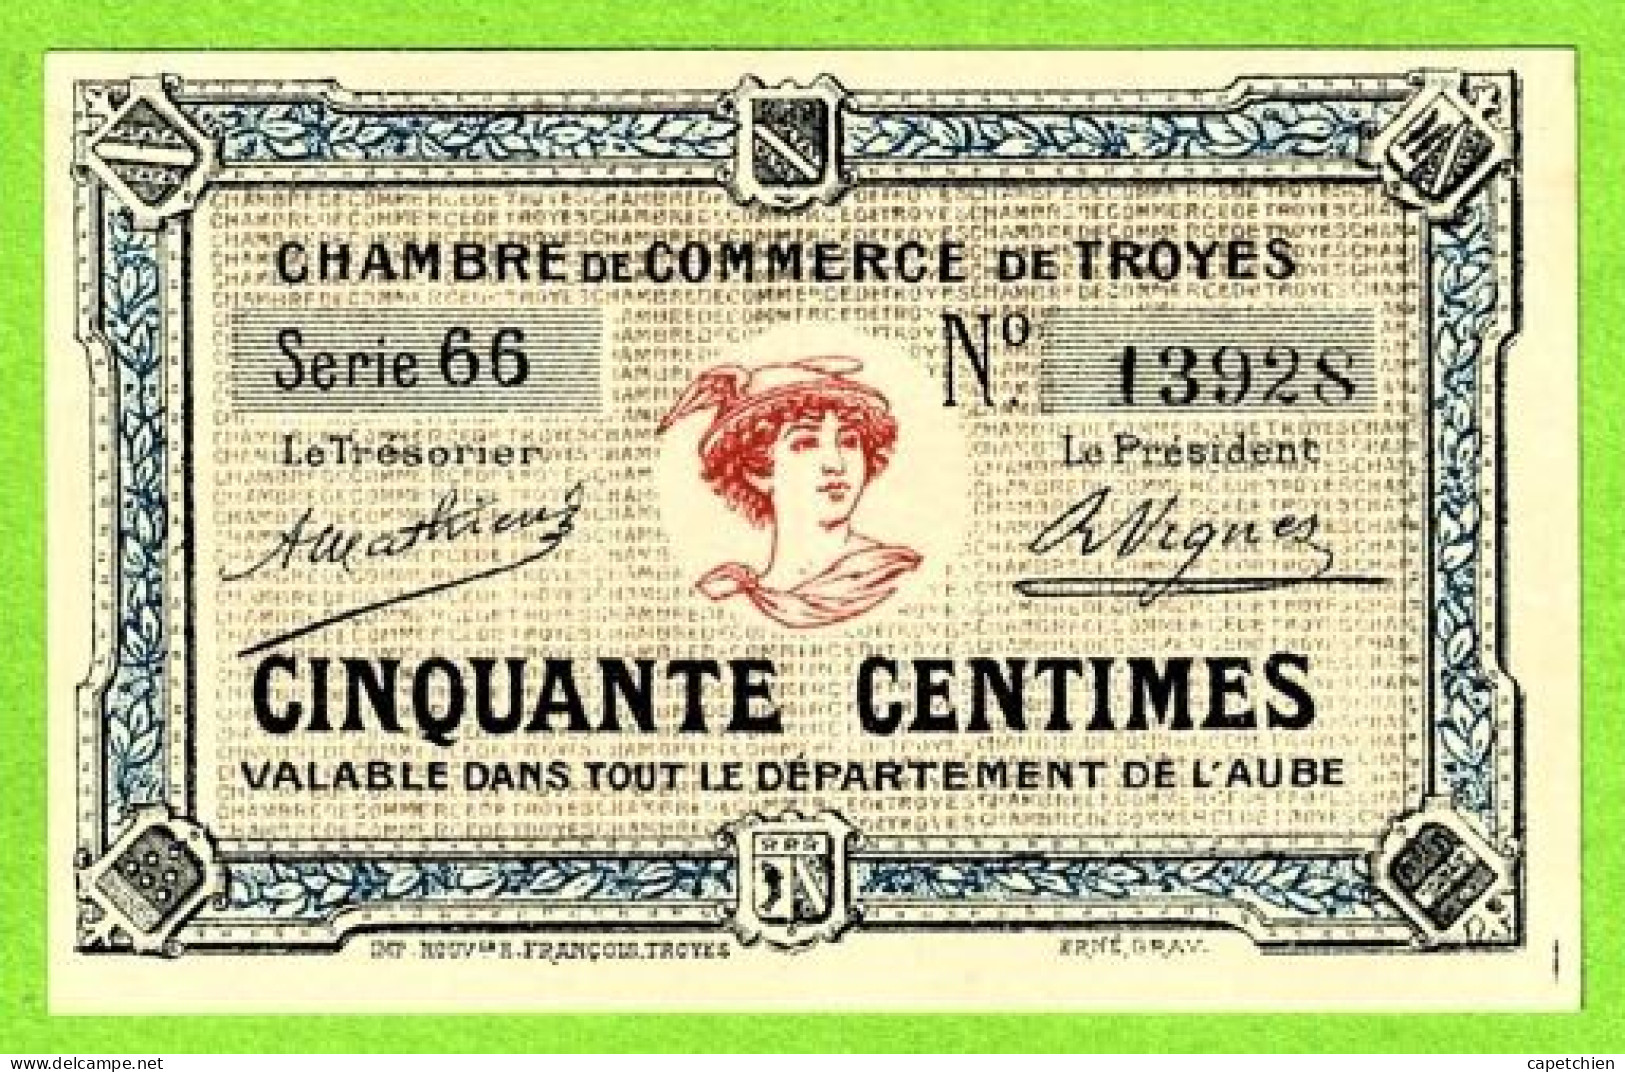 FRANCE / CHAMBRE De COMMERCE De TROYES/ 50 CENTIMES / 13928 /  SERIE 66 - Chamber Of Commerce